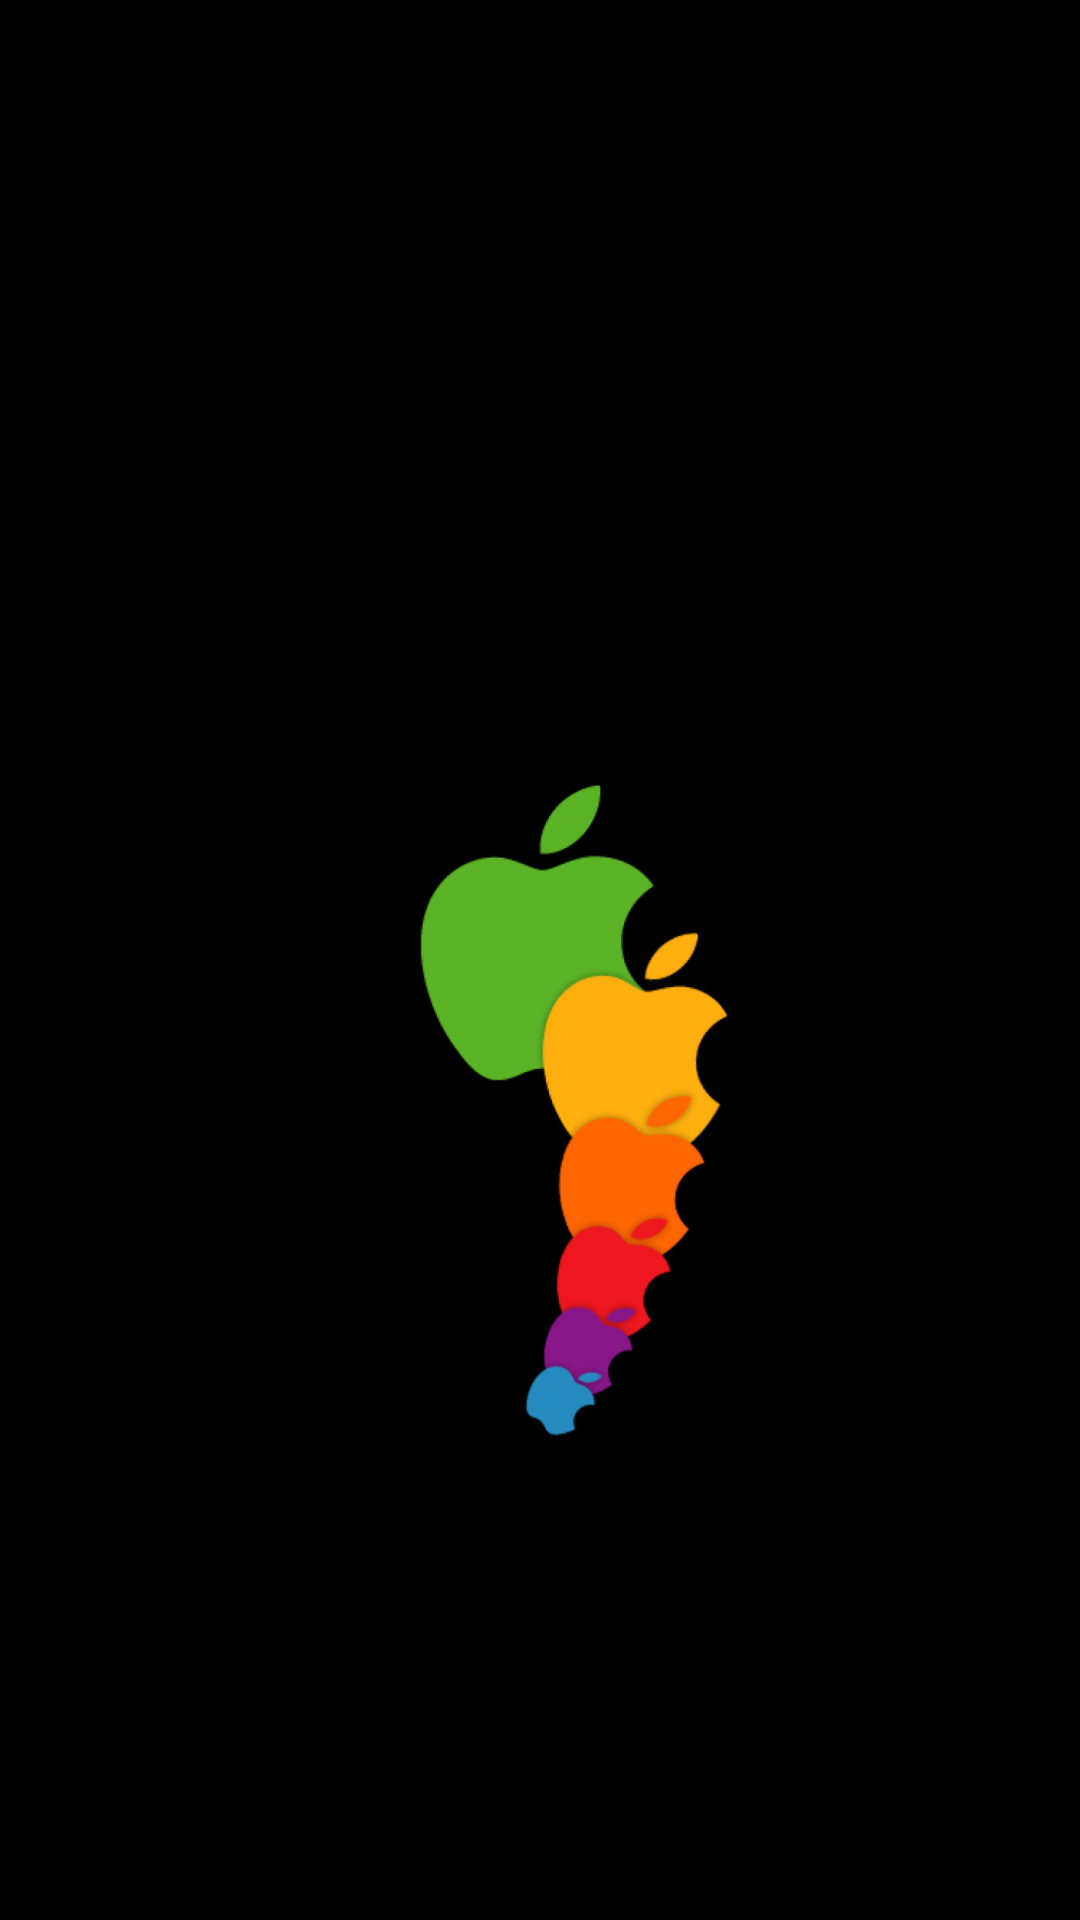 Apple Rainbow wallpaper 1080x1920